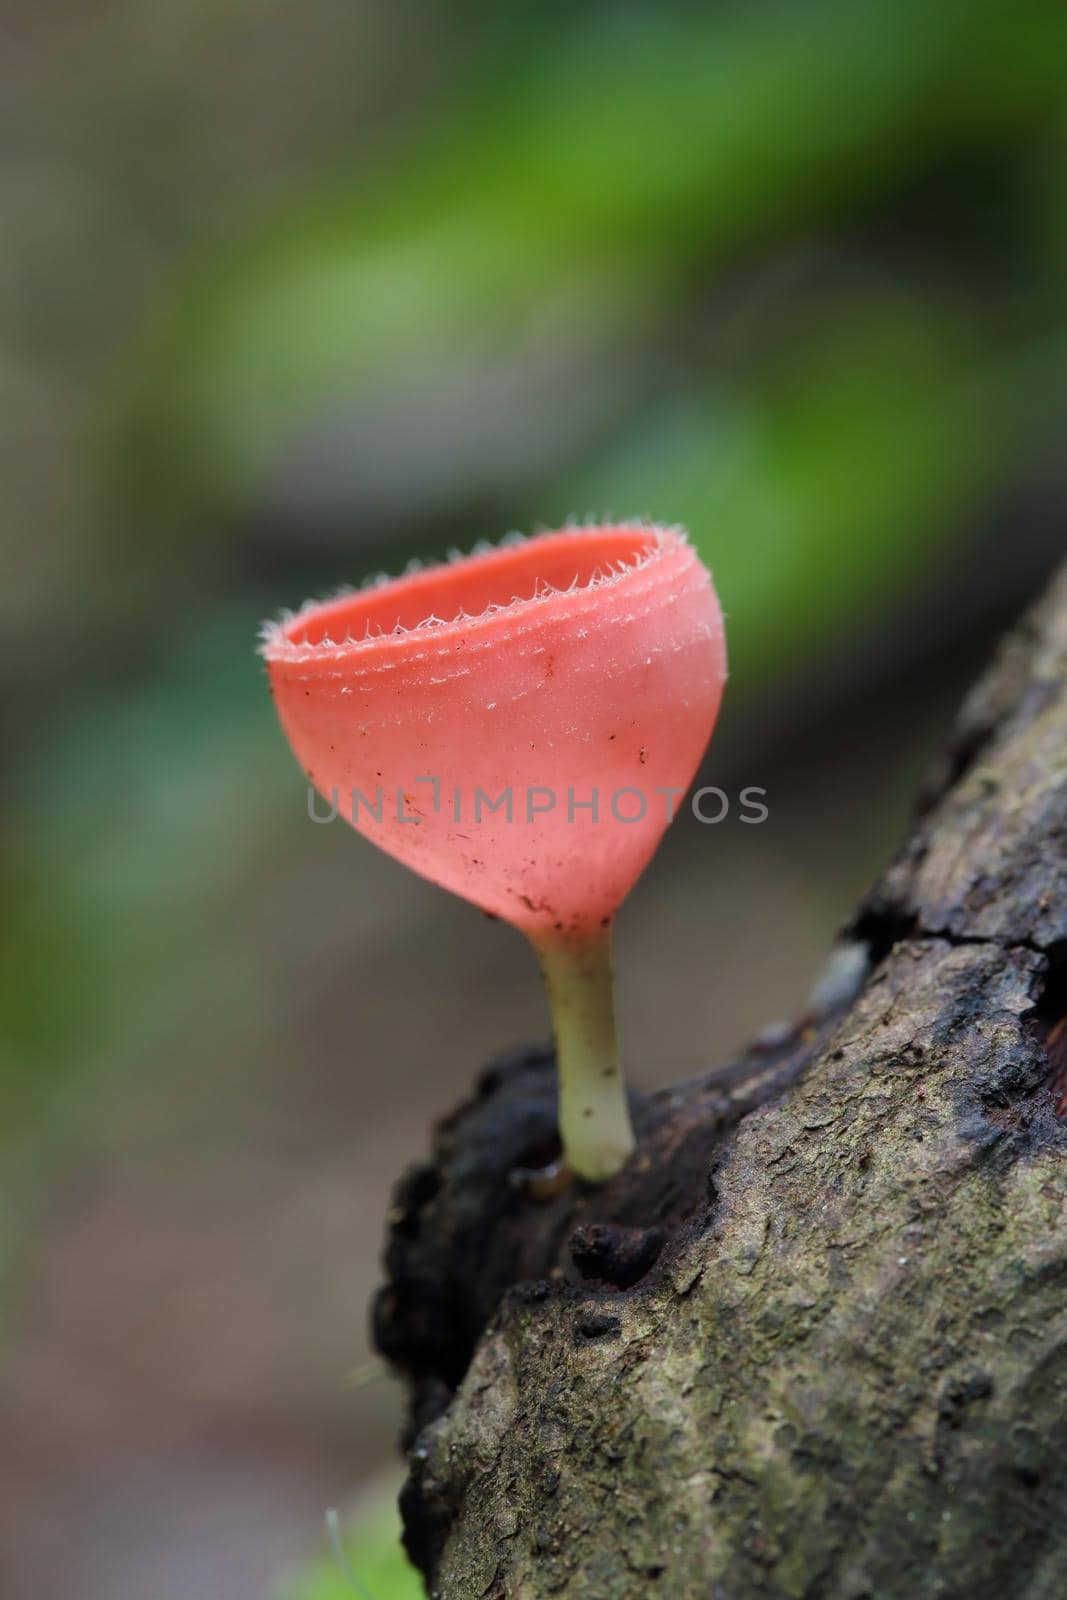 Champagne mushroom in rain forest, Thailand